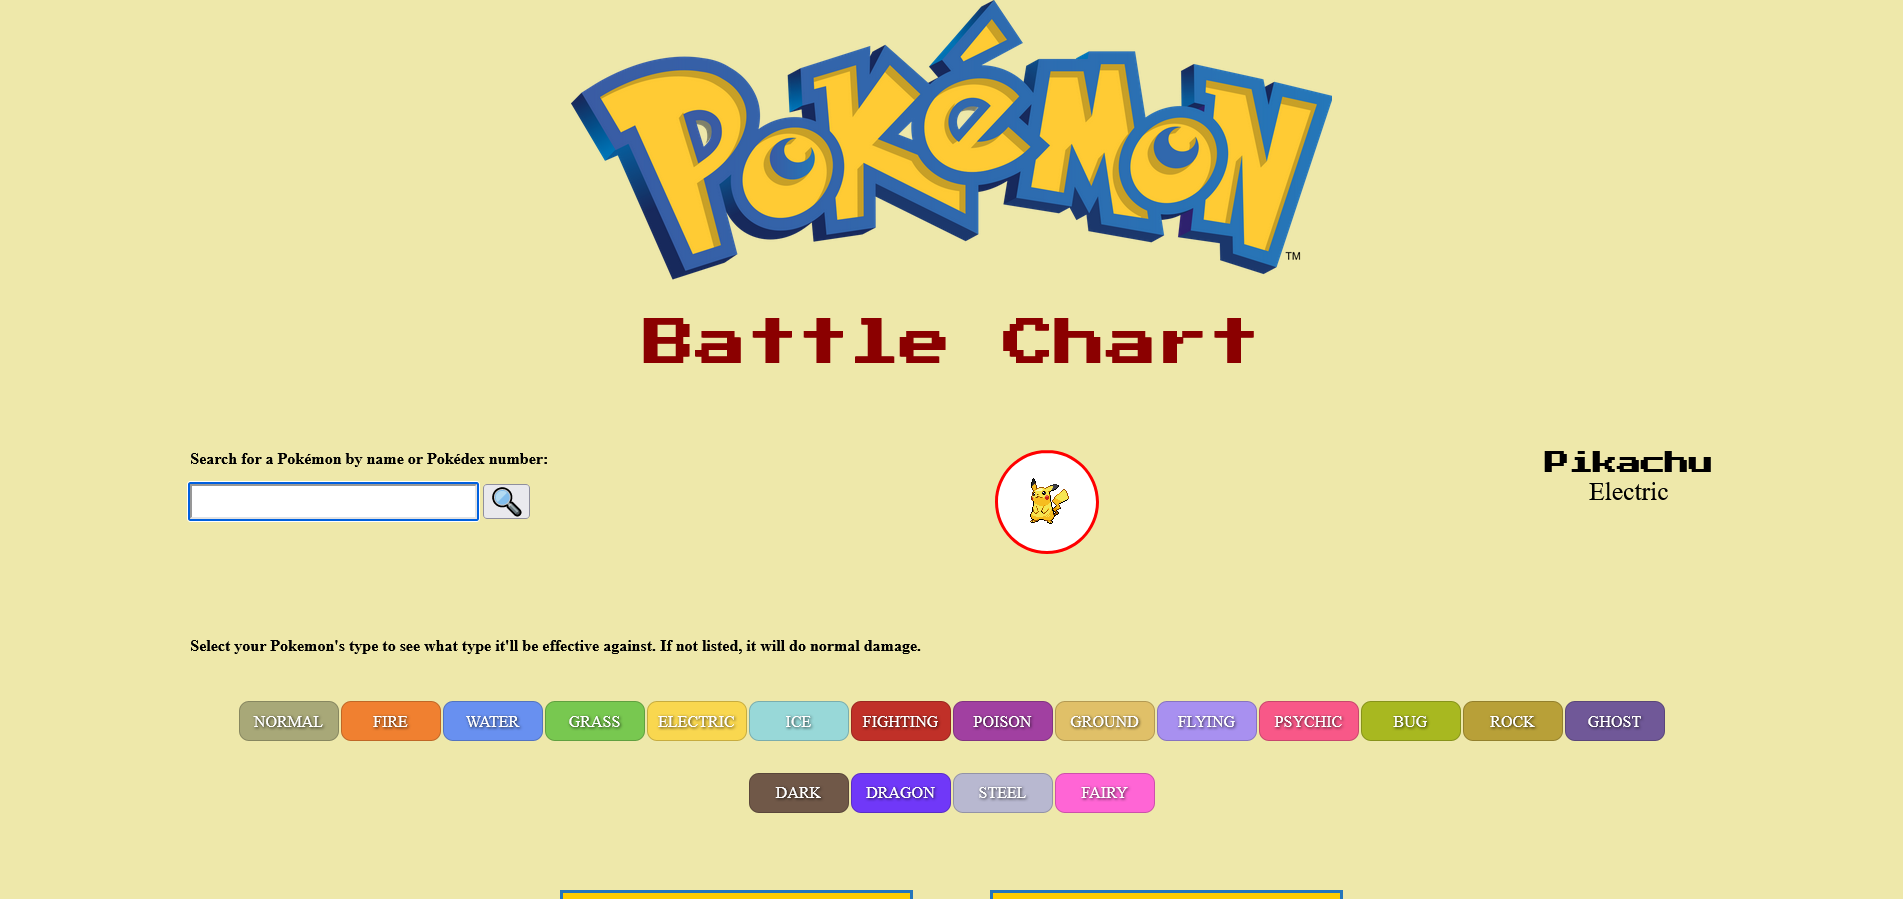 A Pokemon Battle Chart